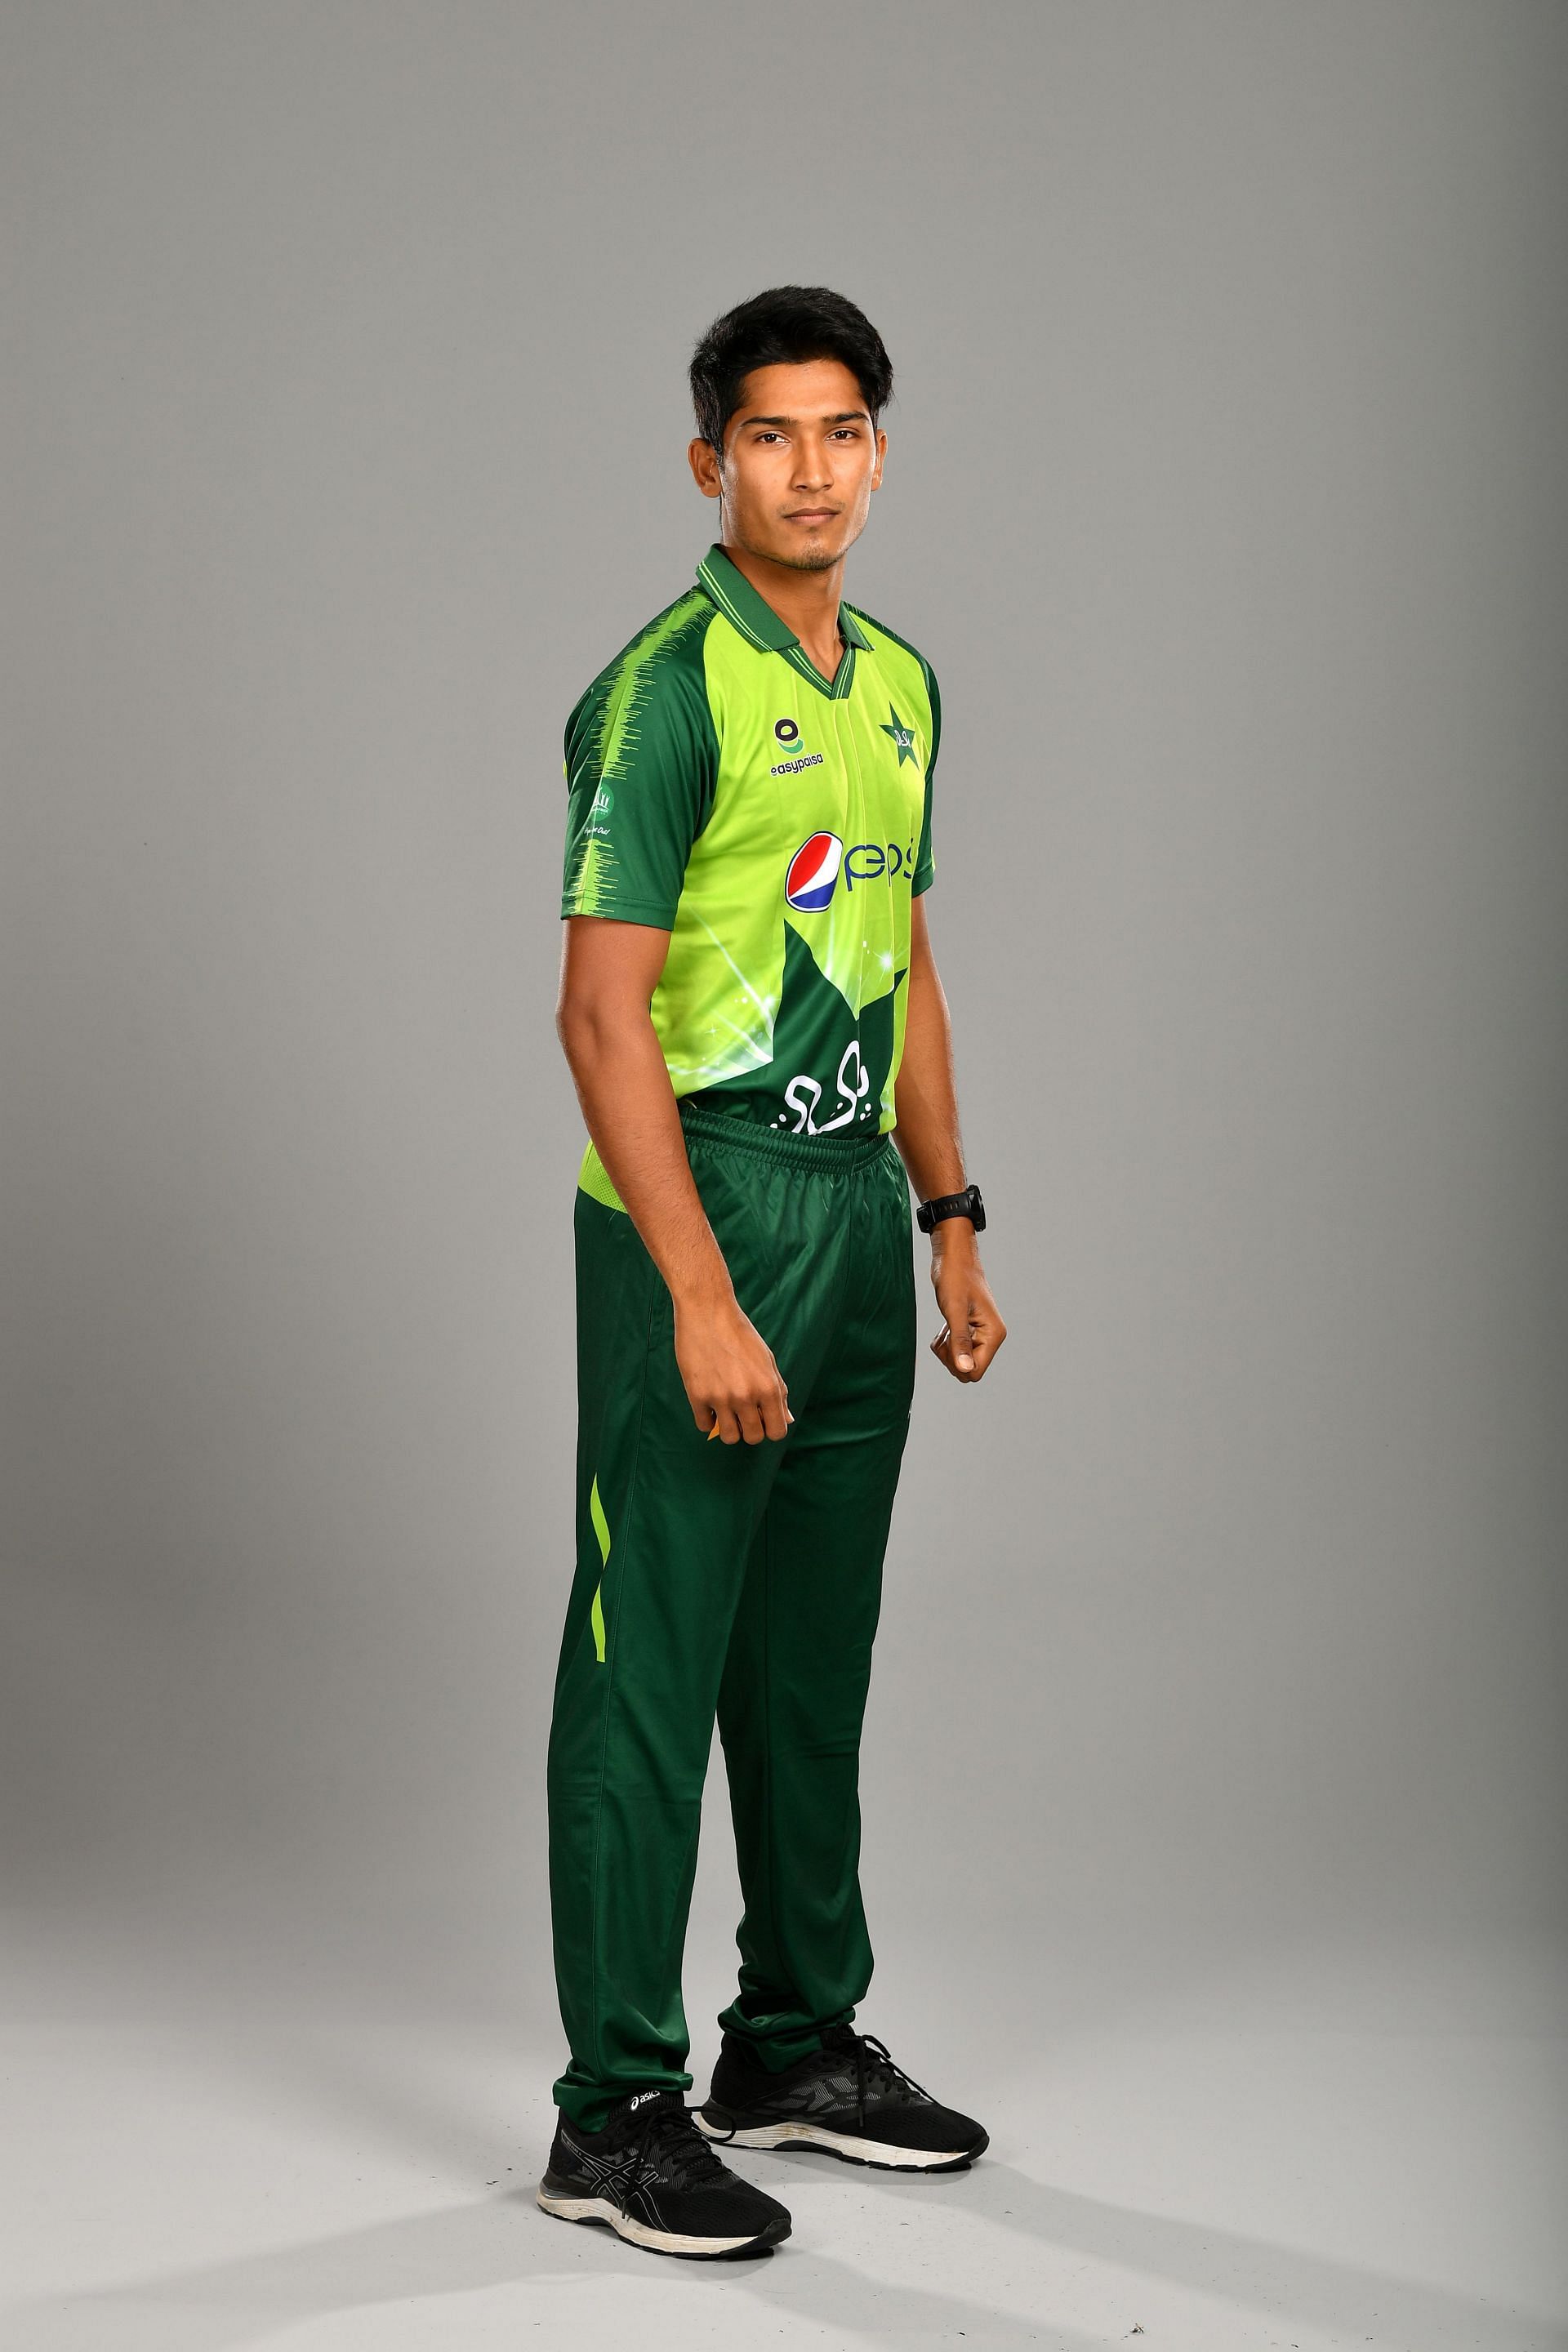 Pakistan fast bowler Mohammad Hasnain